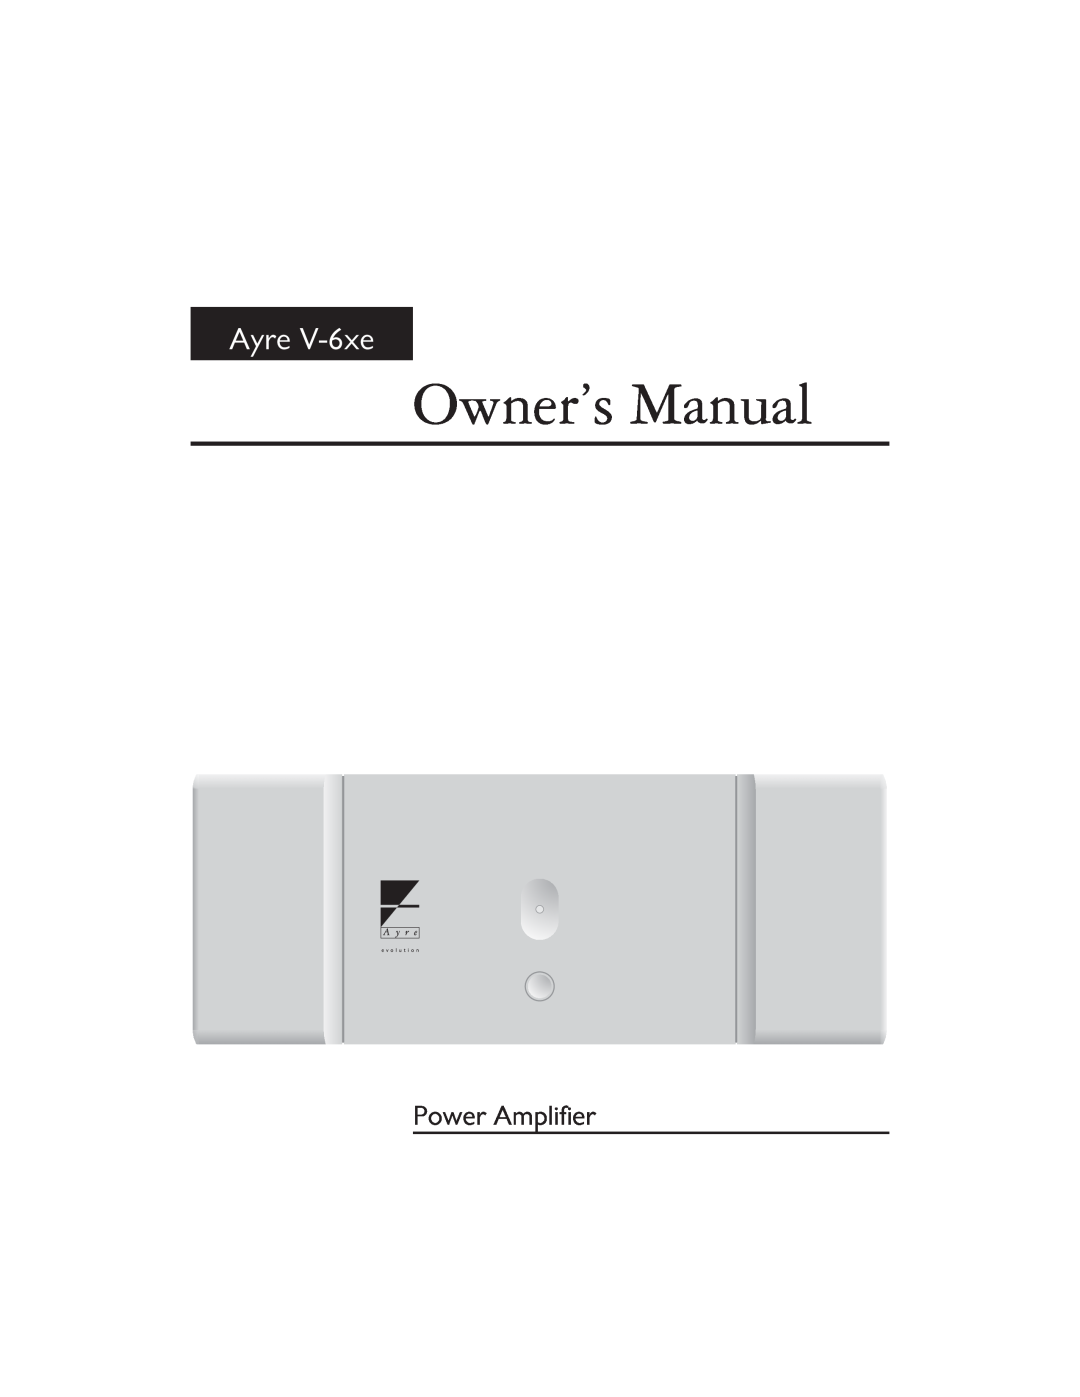 Ayre Acoustics Power Amplifier owner manual Ayre V-6xe 